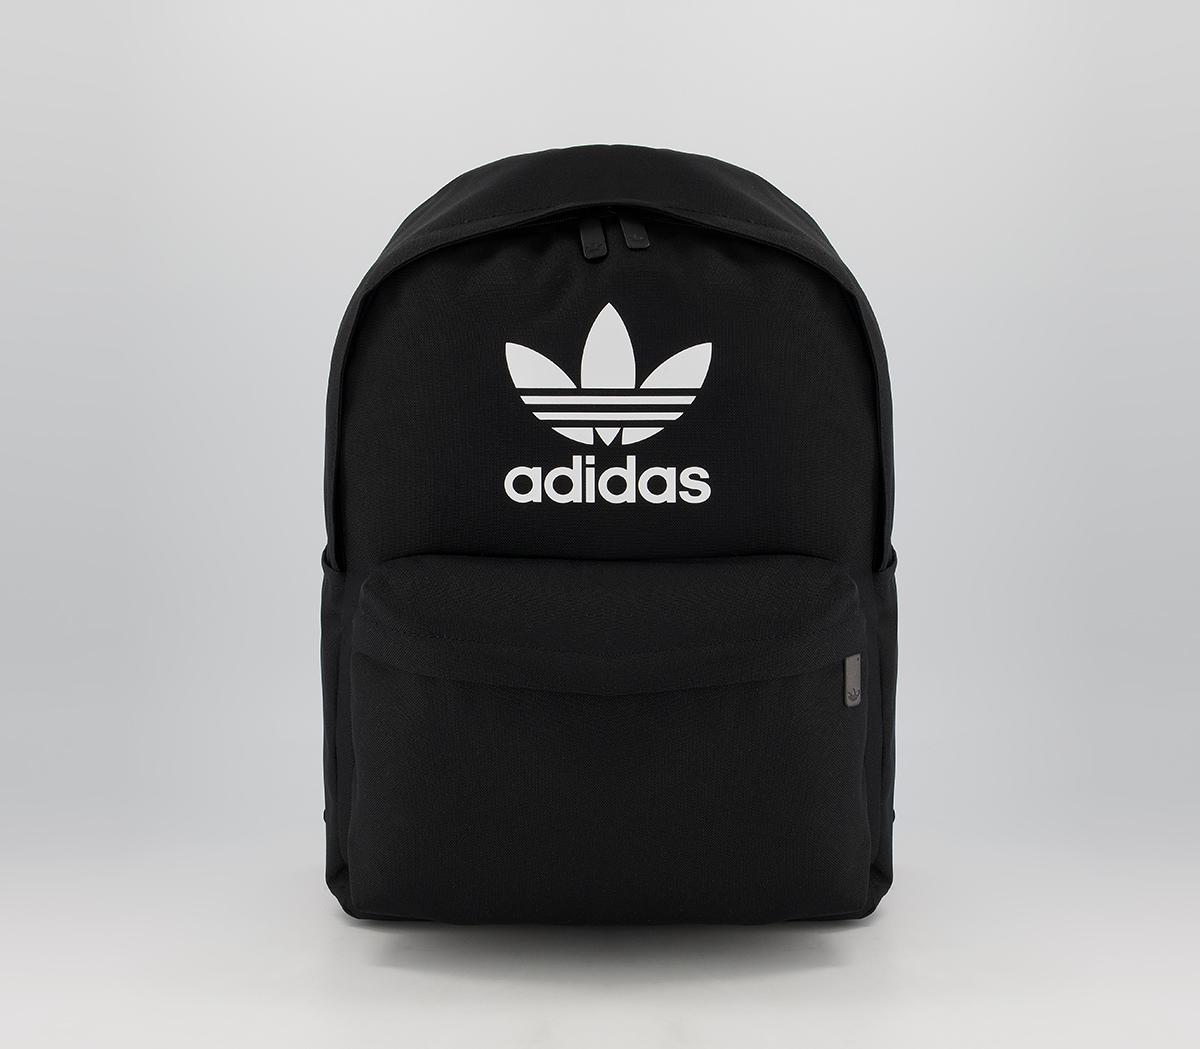 adidasAdicolor BackpackBlack